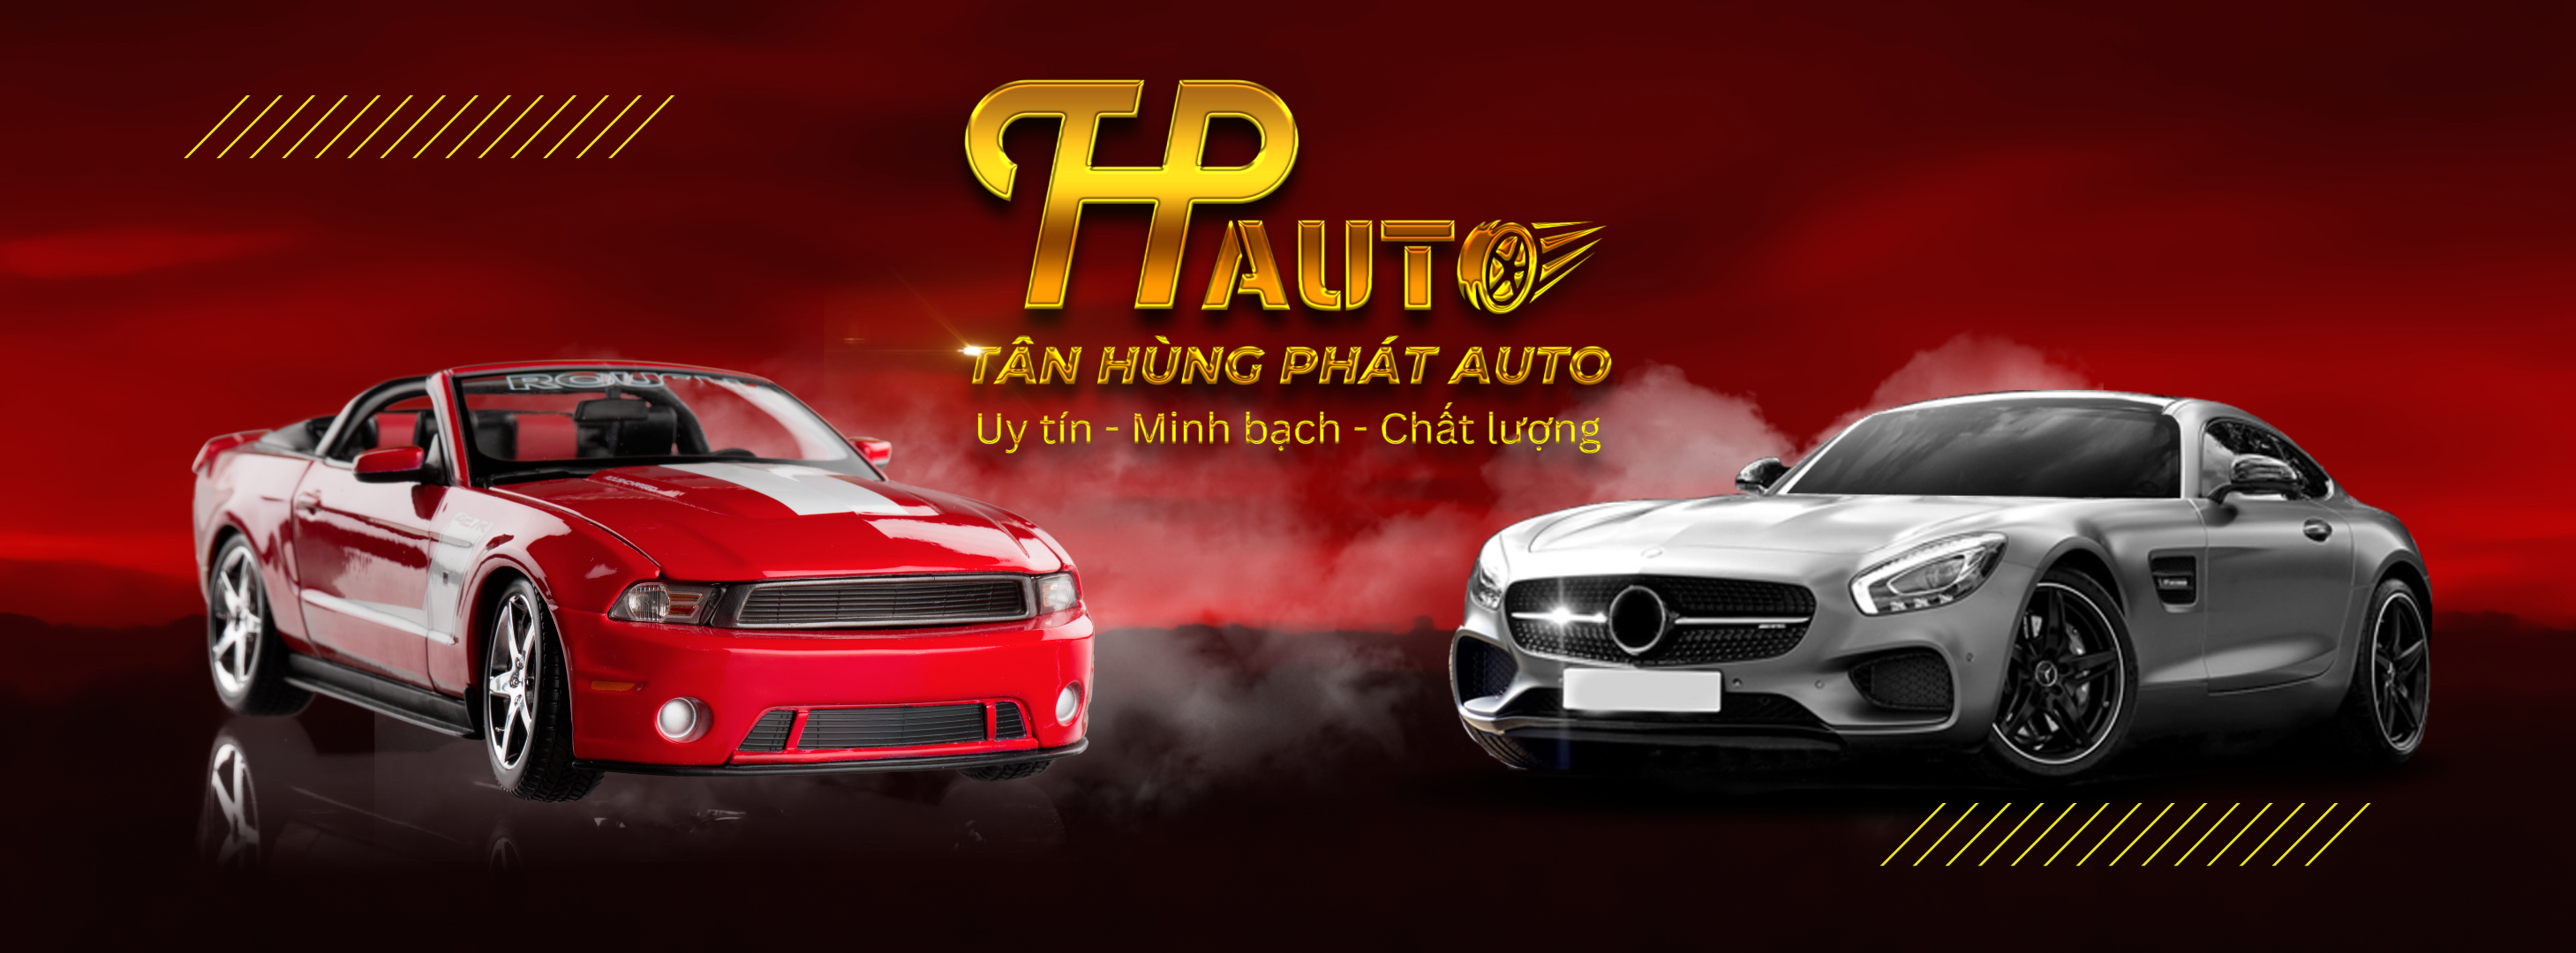 Gioi thieu Tan Hung Phat Auto uy tin minh bach chat luong